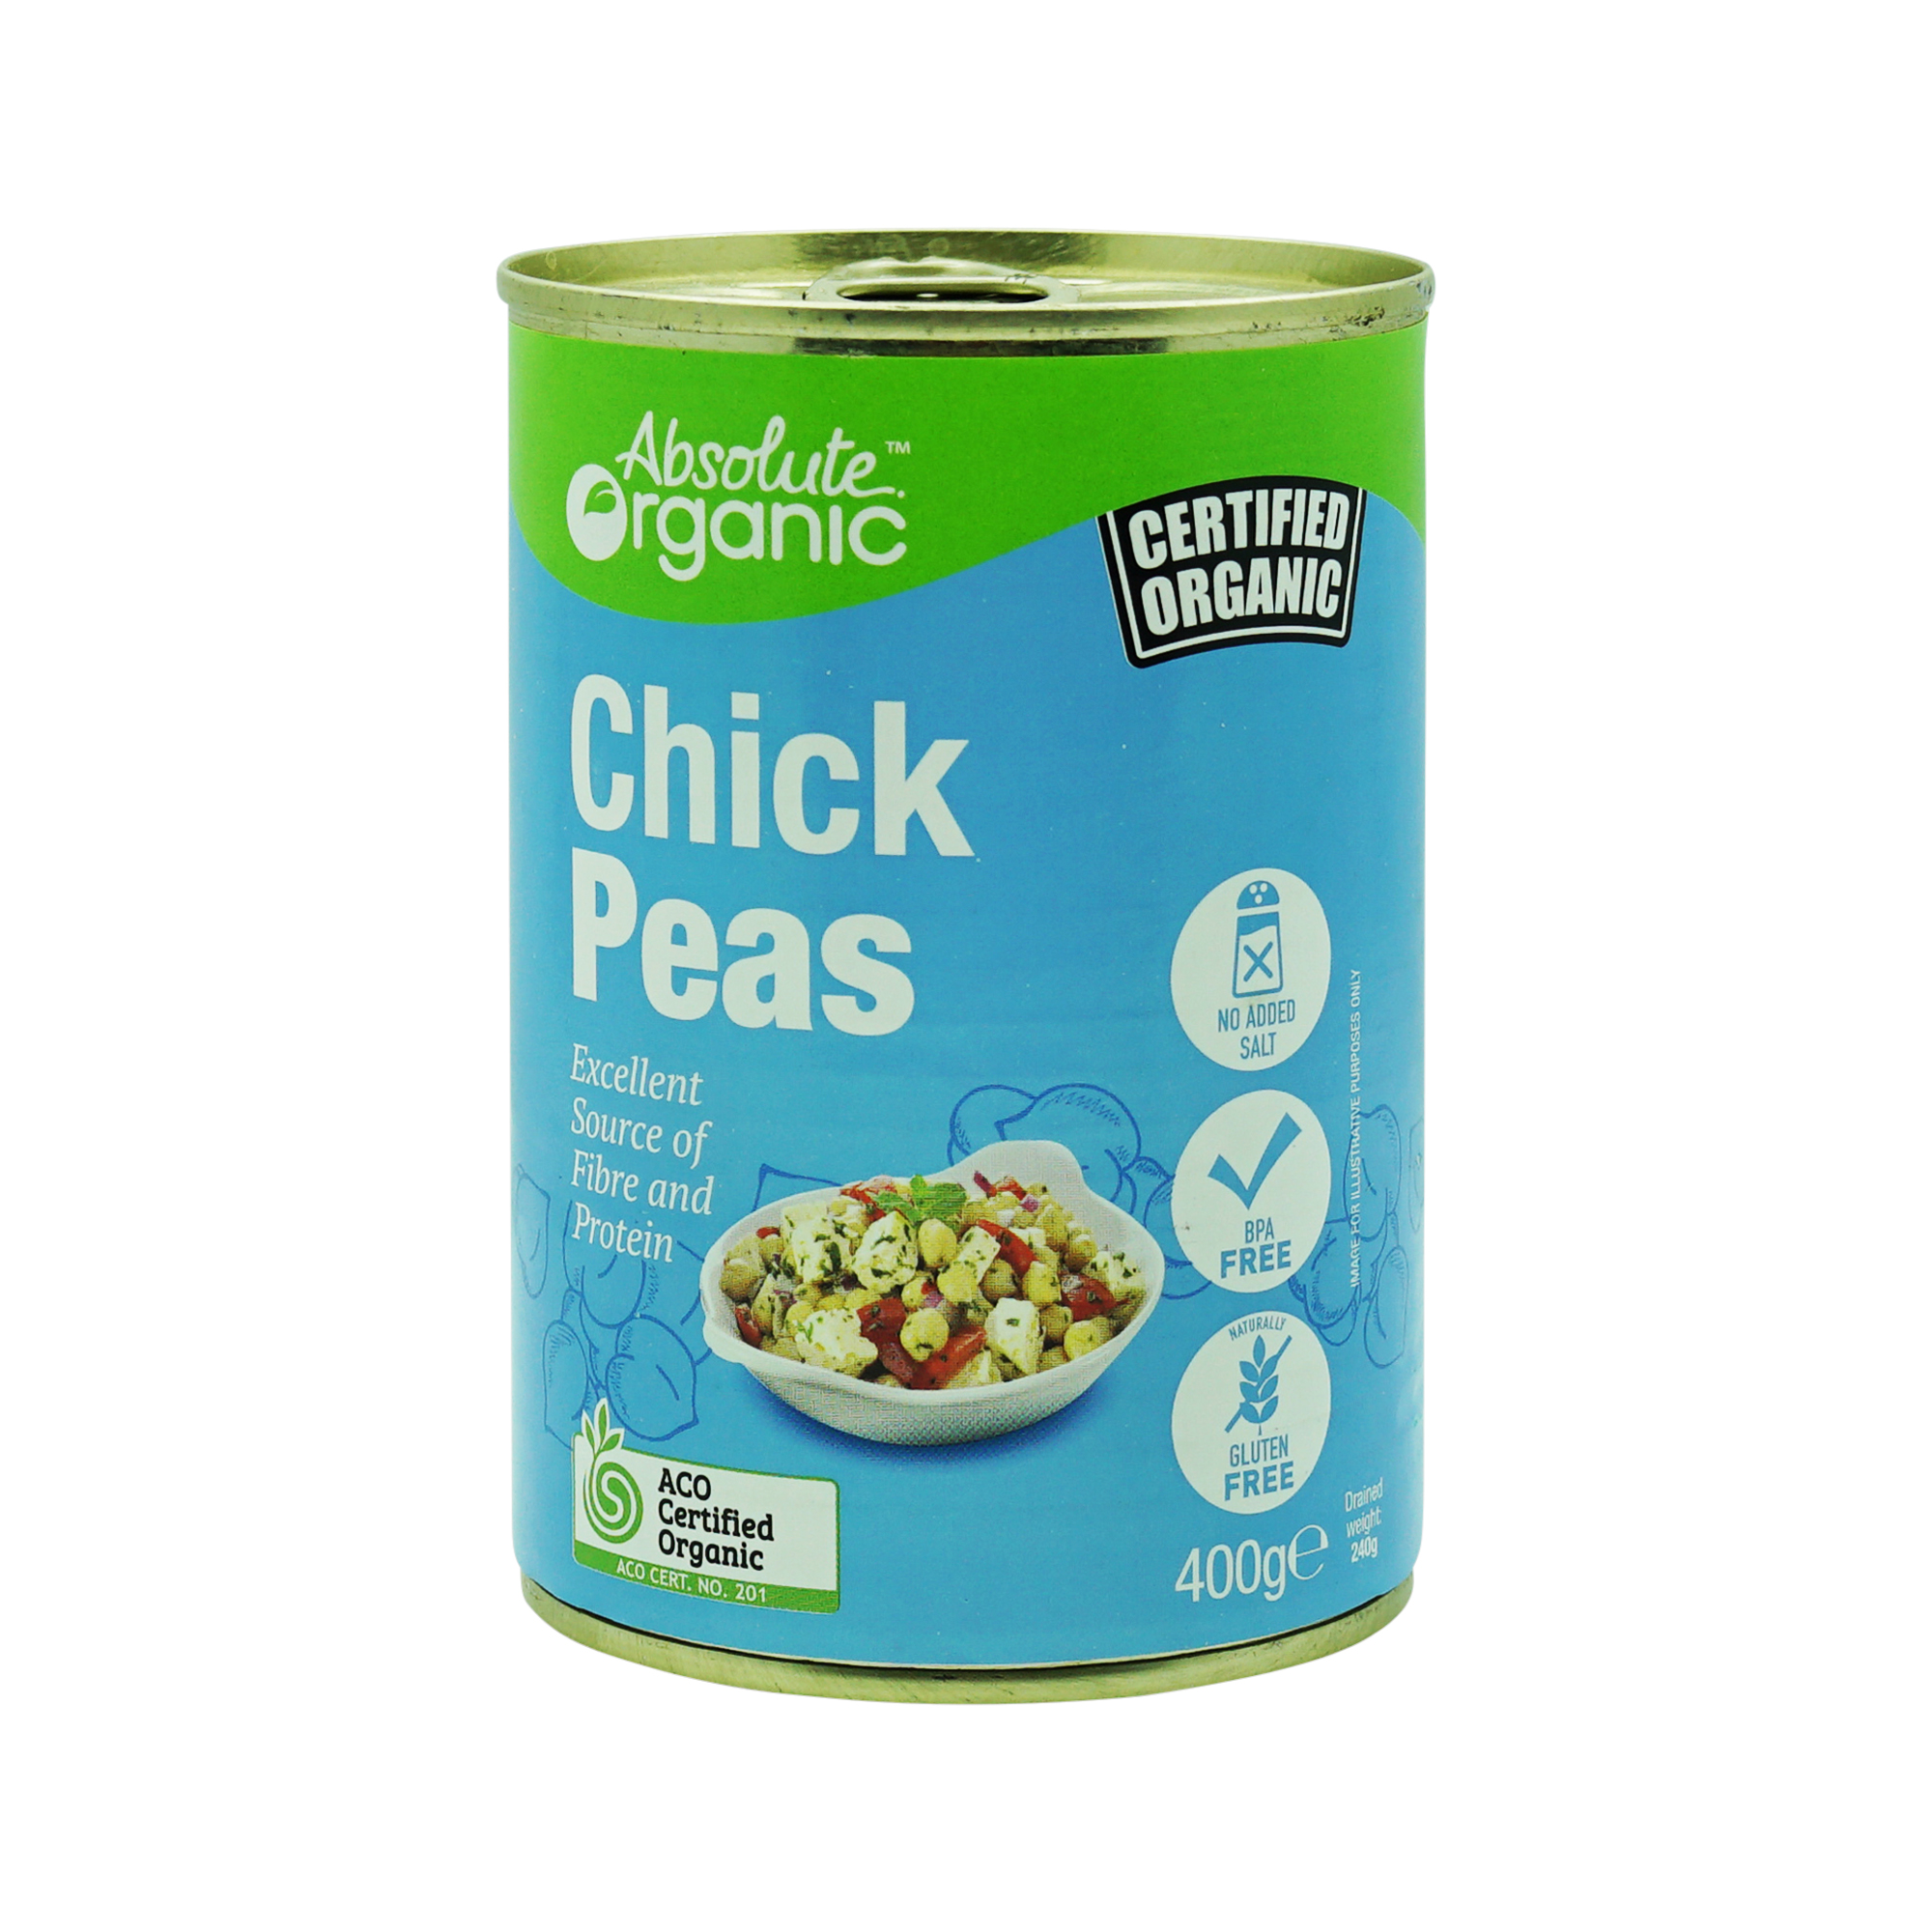 Absolute Organic Chick Peas (400g)